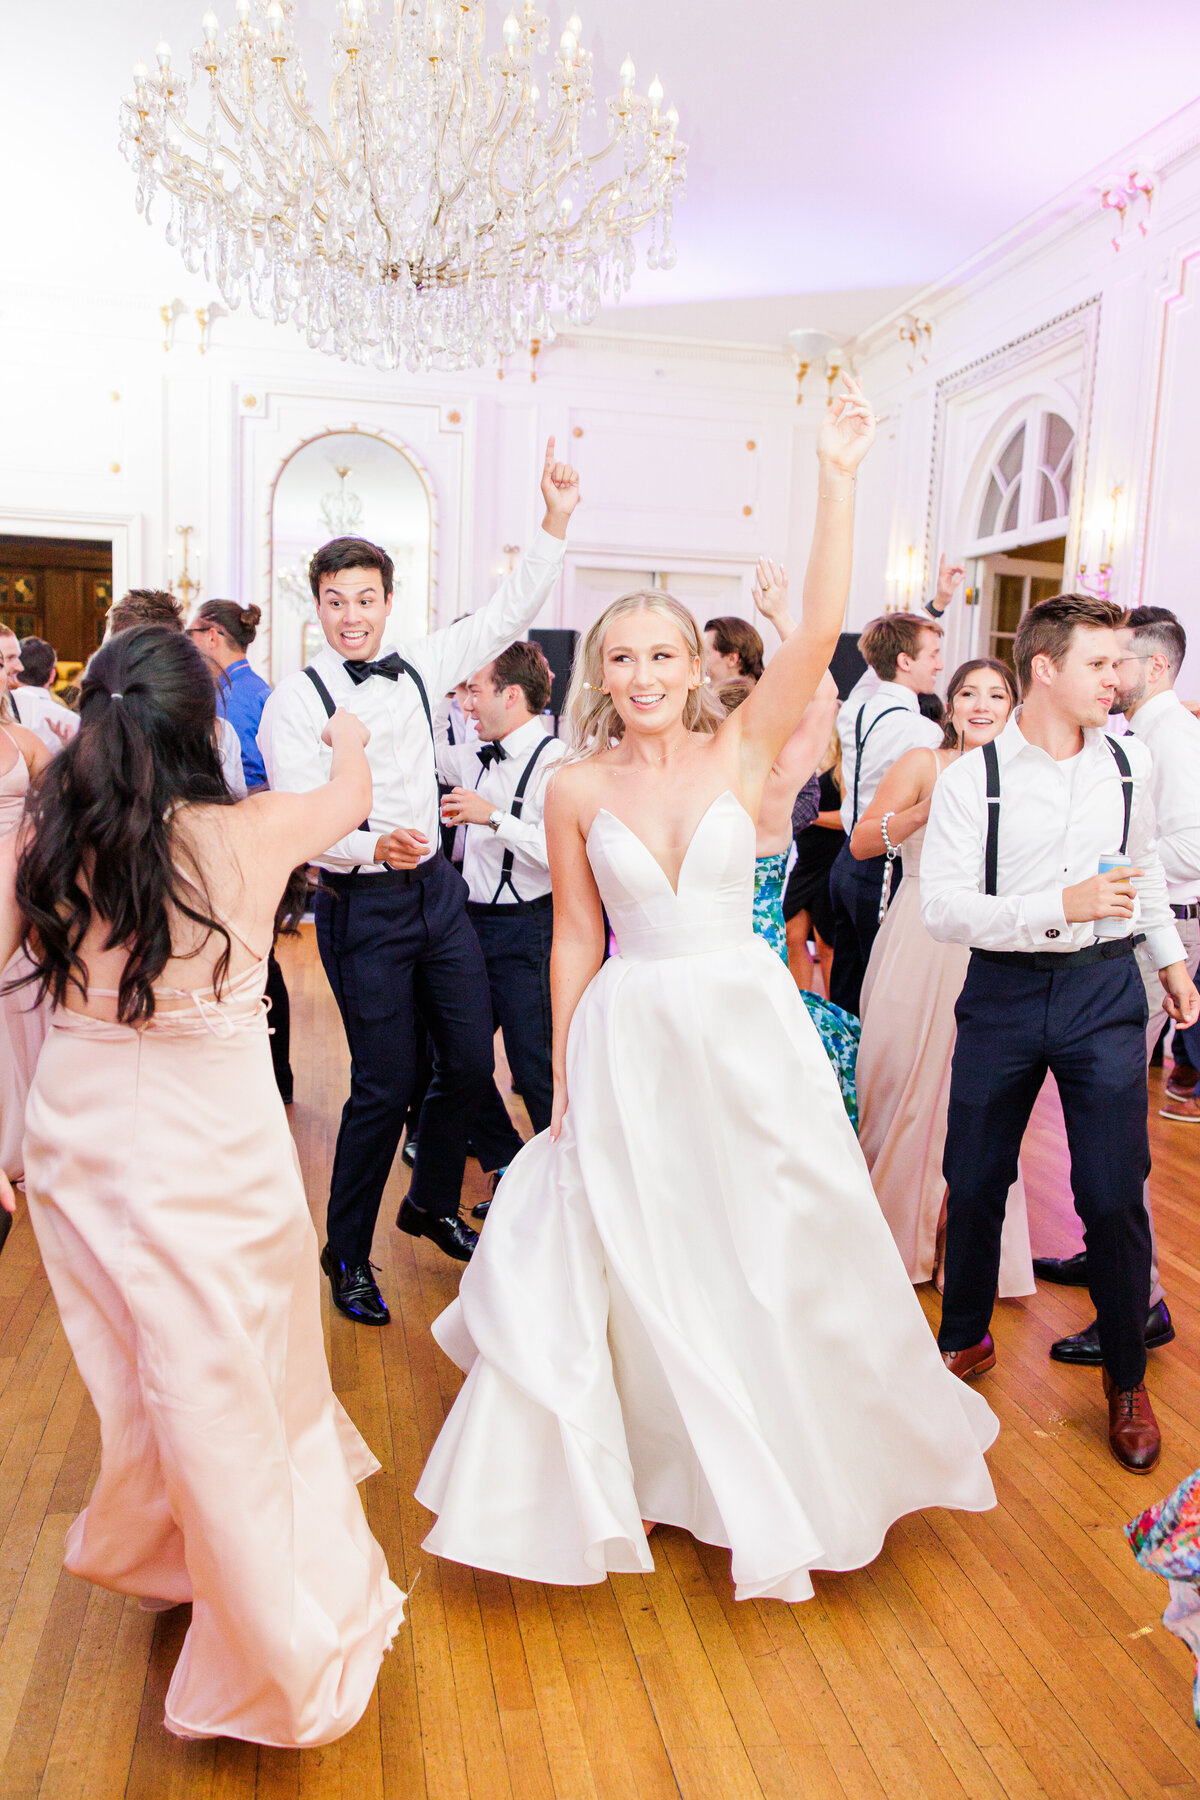 Bride dancing with friends representing joyful wedding services in Boston